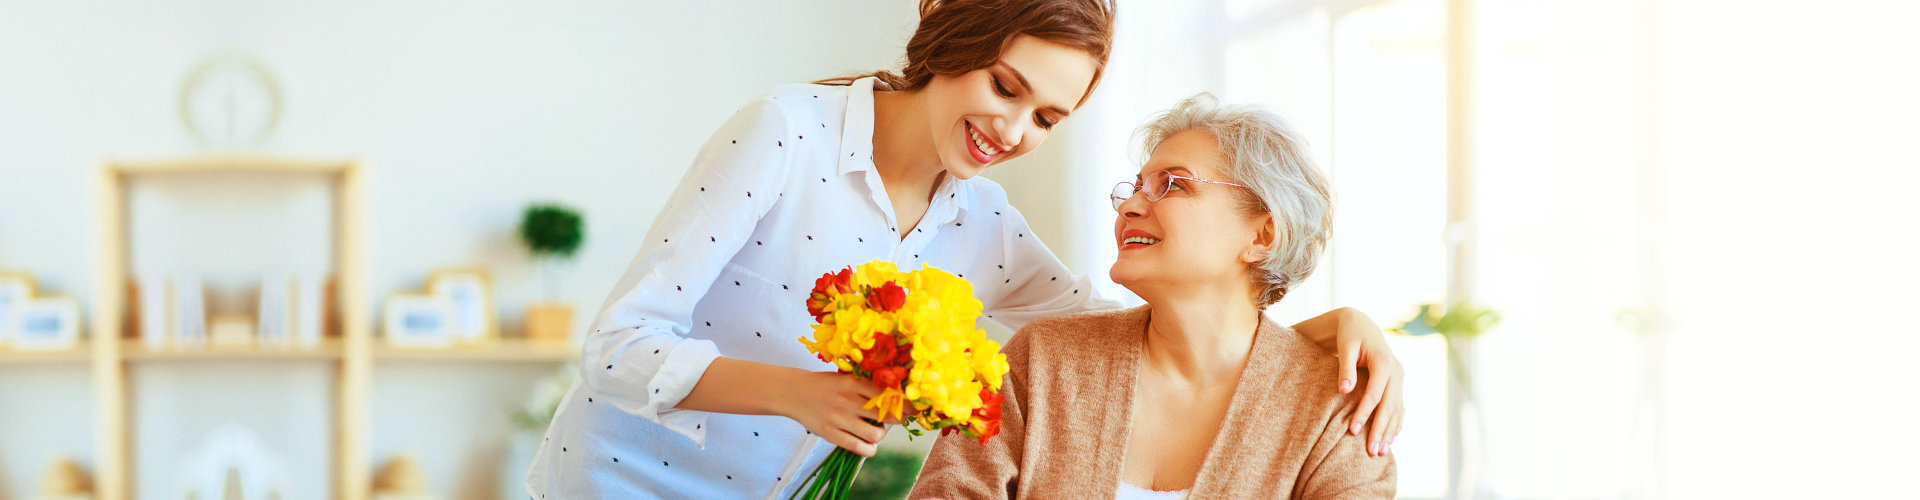 caregiver giving flowers to a senior